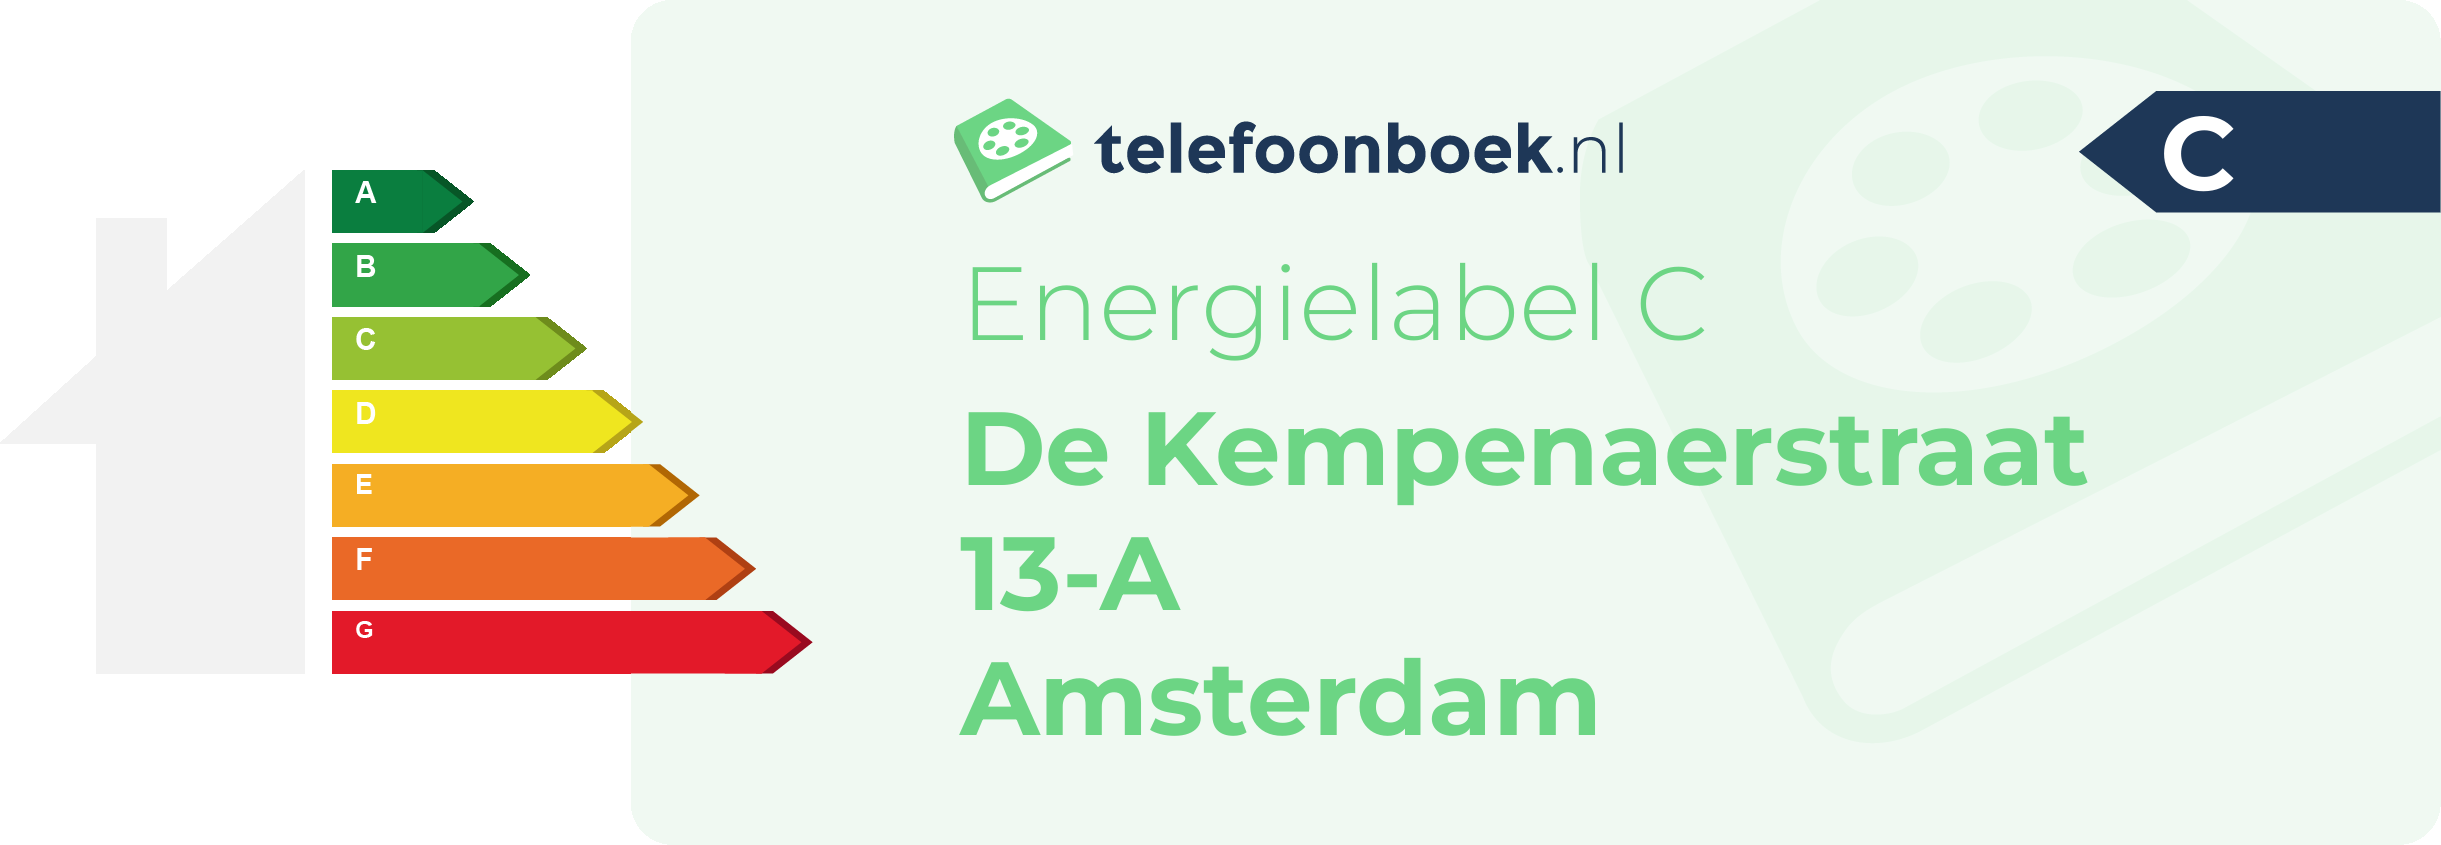 Energielabel De Kempenaerstraat 13-A Amsterdam